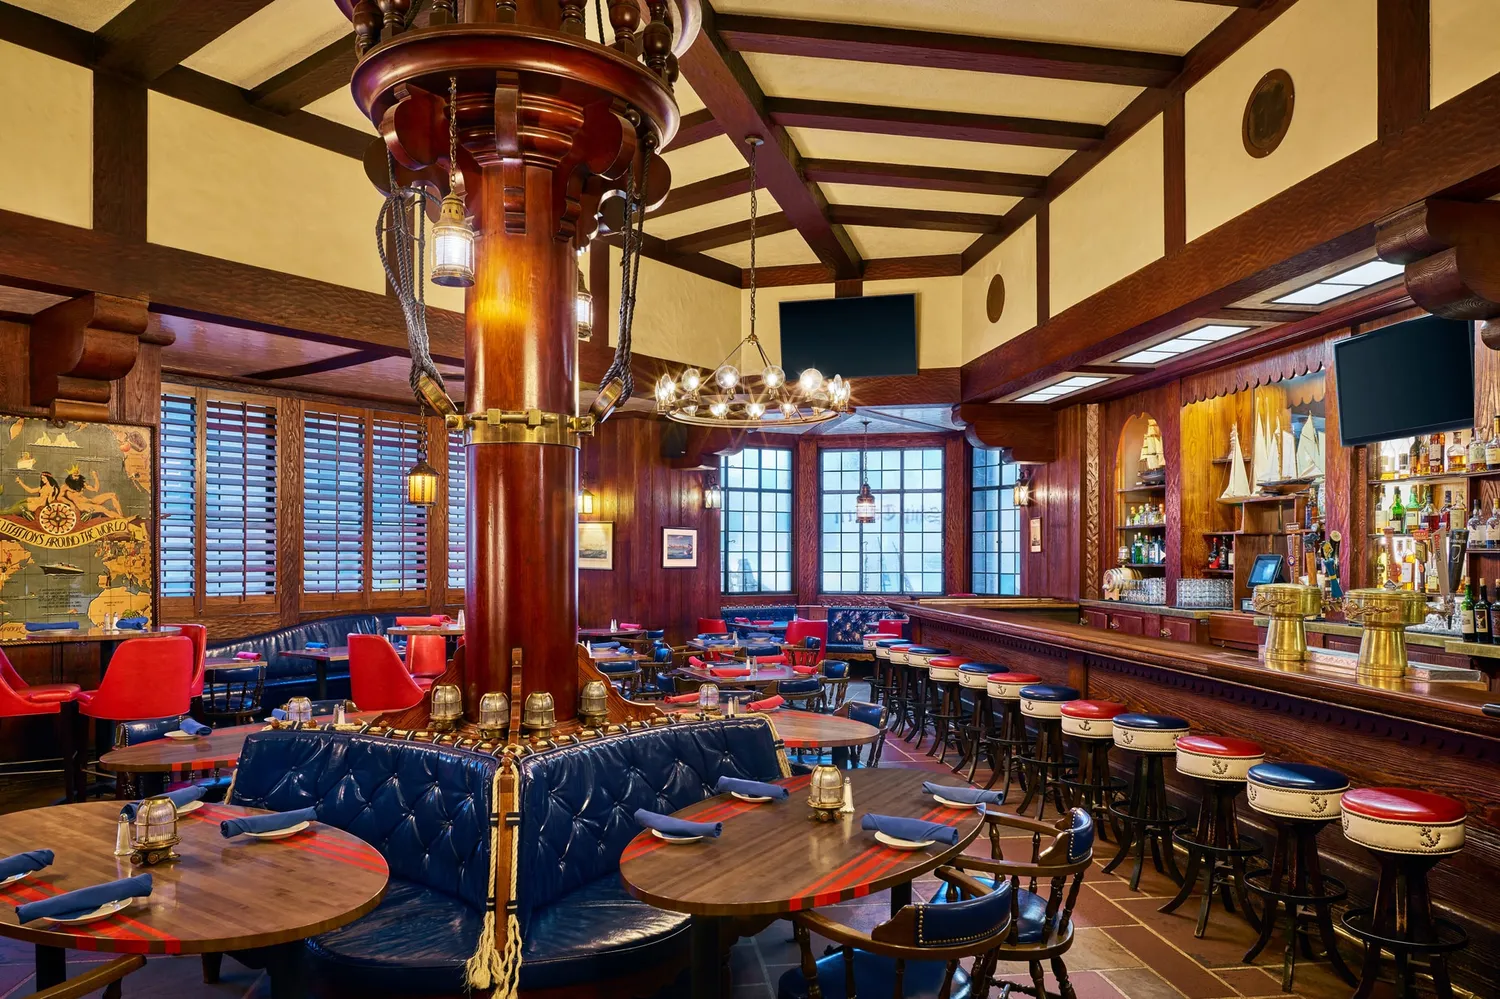 Palace arms Restaurant Denver